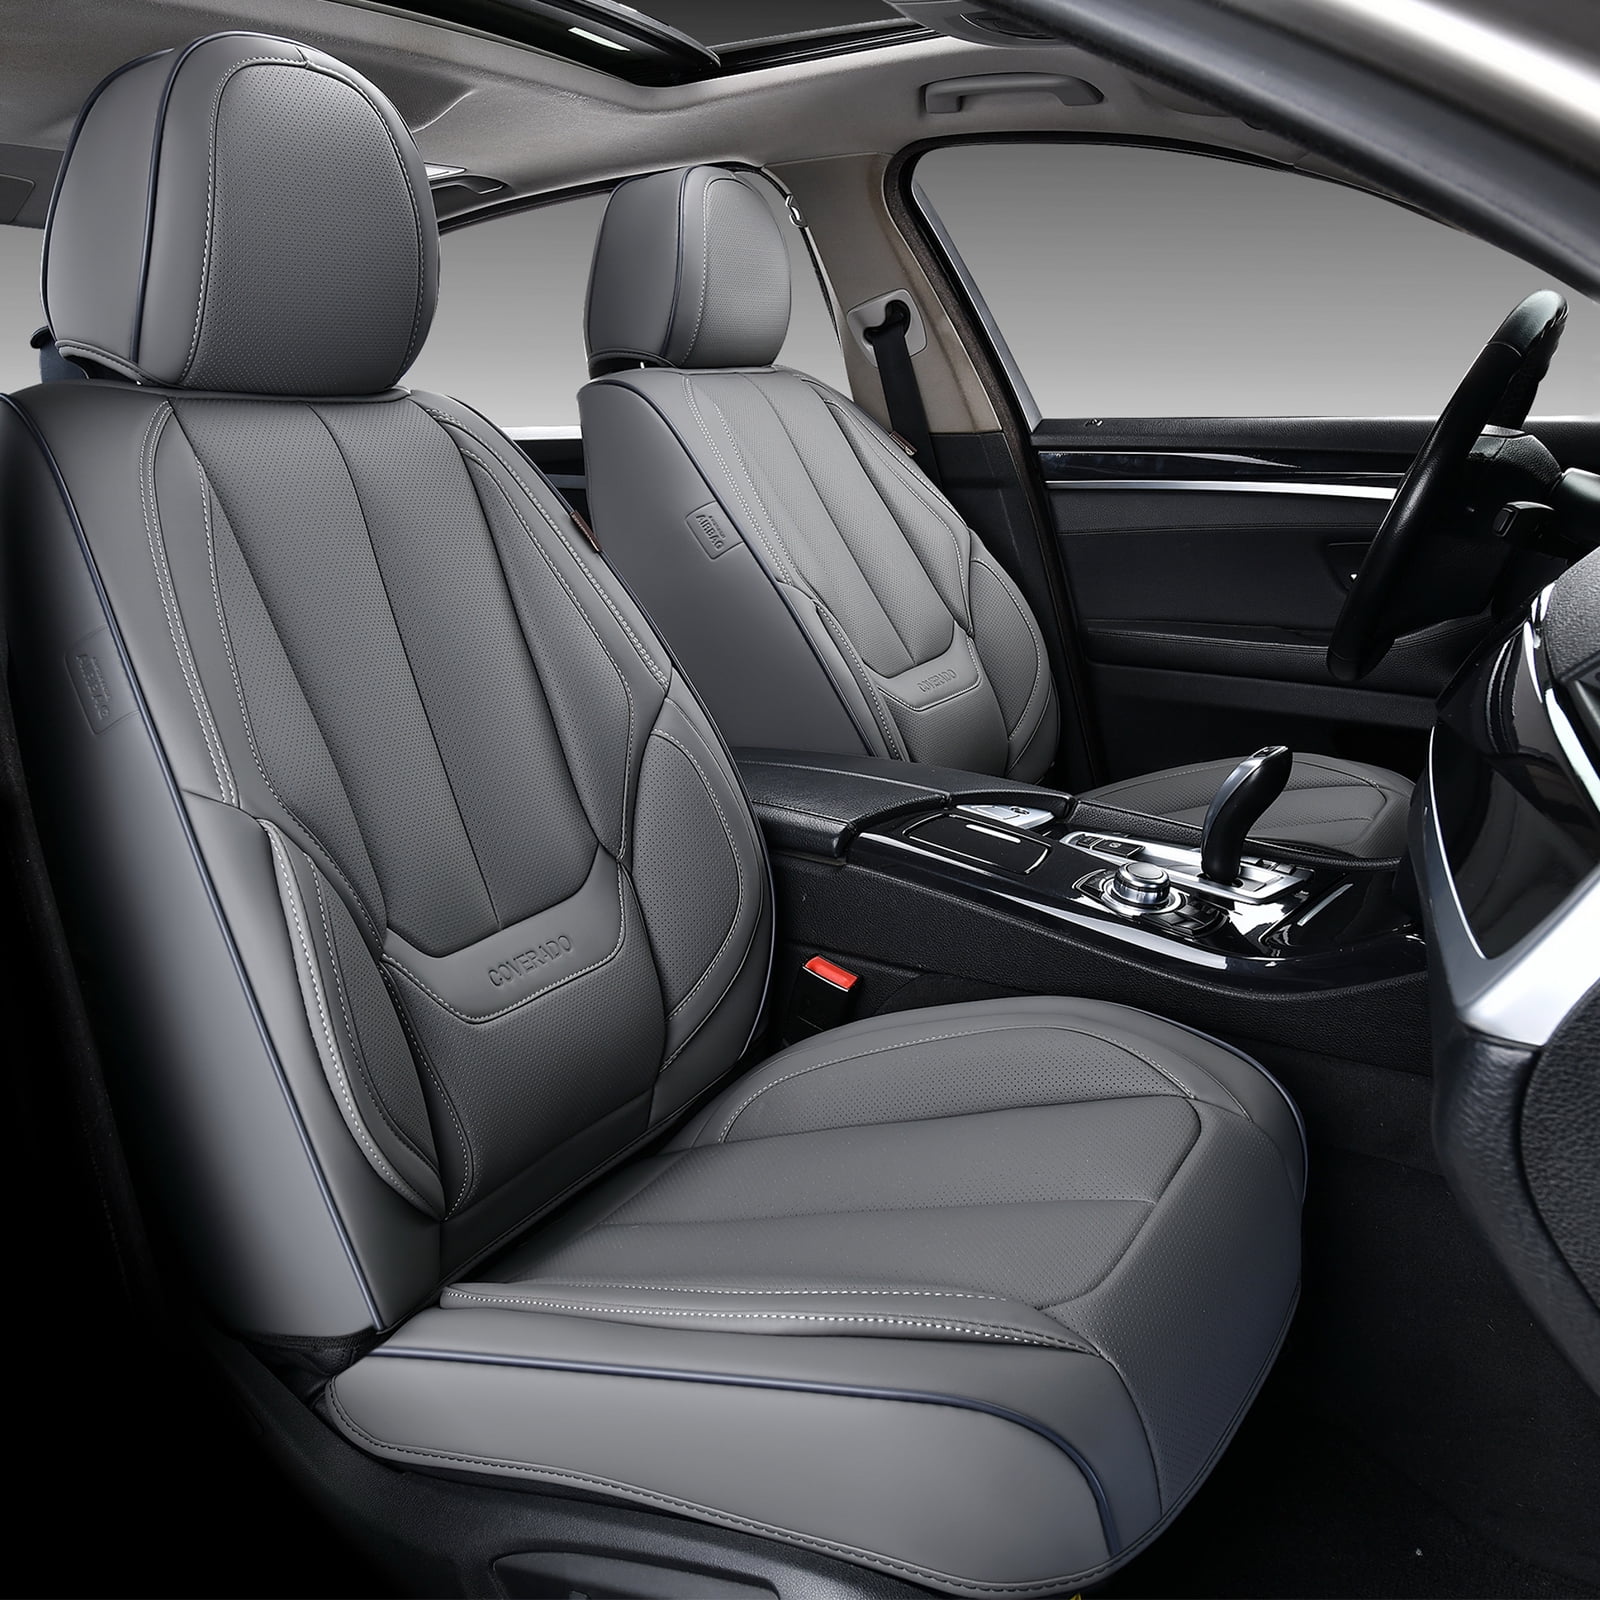 Coverado Gray Front Seat Covers, Stylish Waterproof Premium